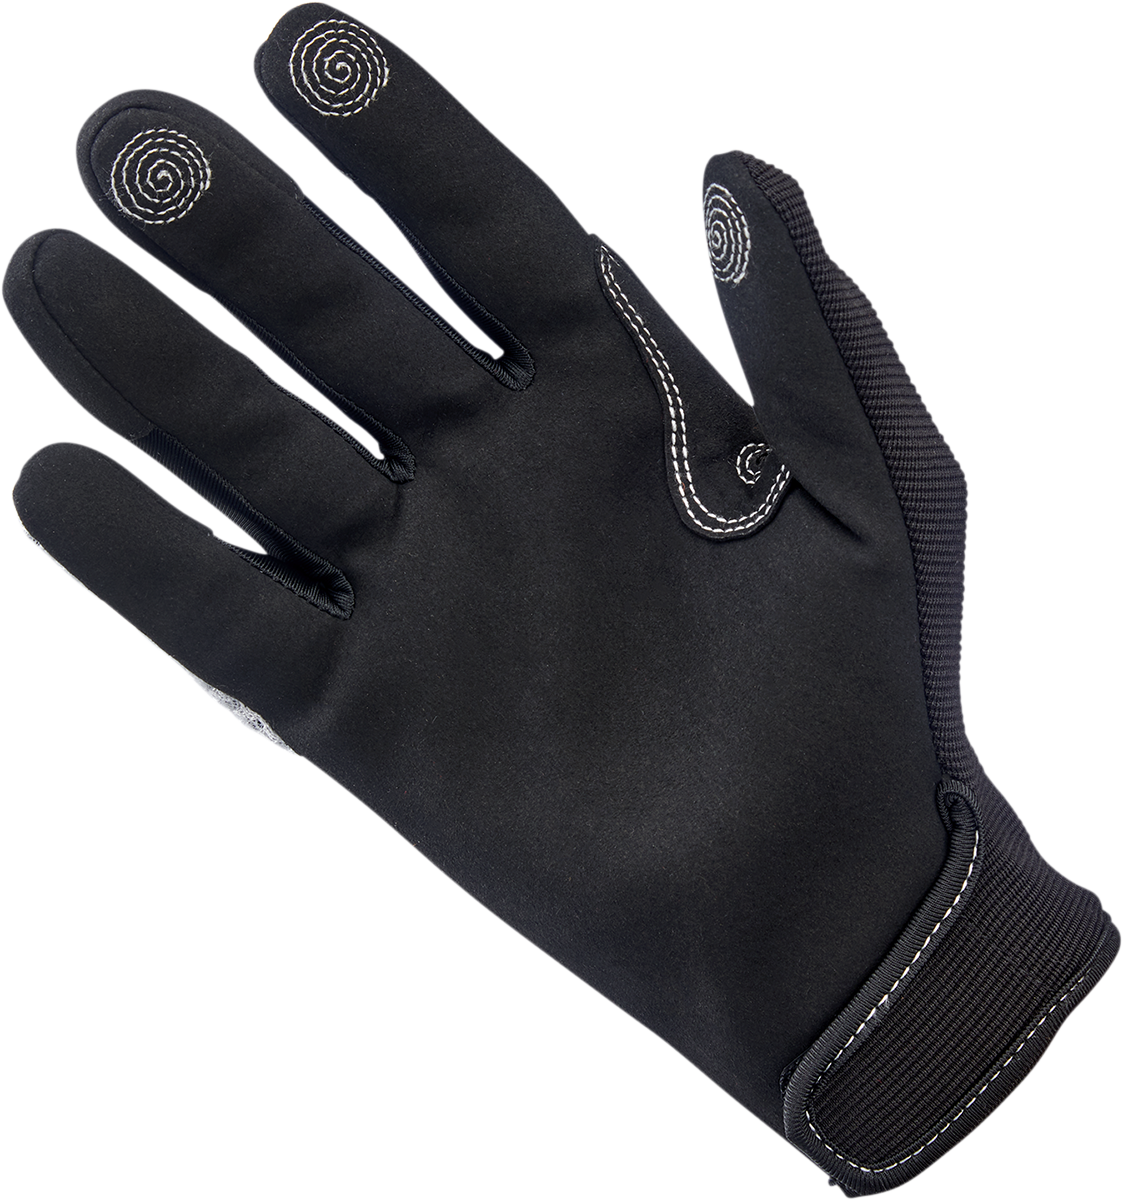 BILTWELL Anza Gloves - White - Large 1507-0401-004